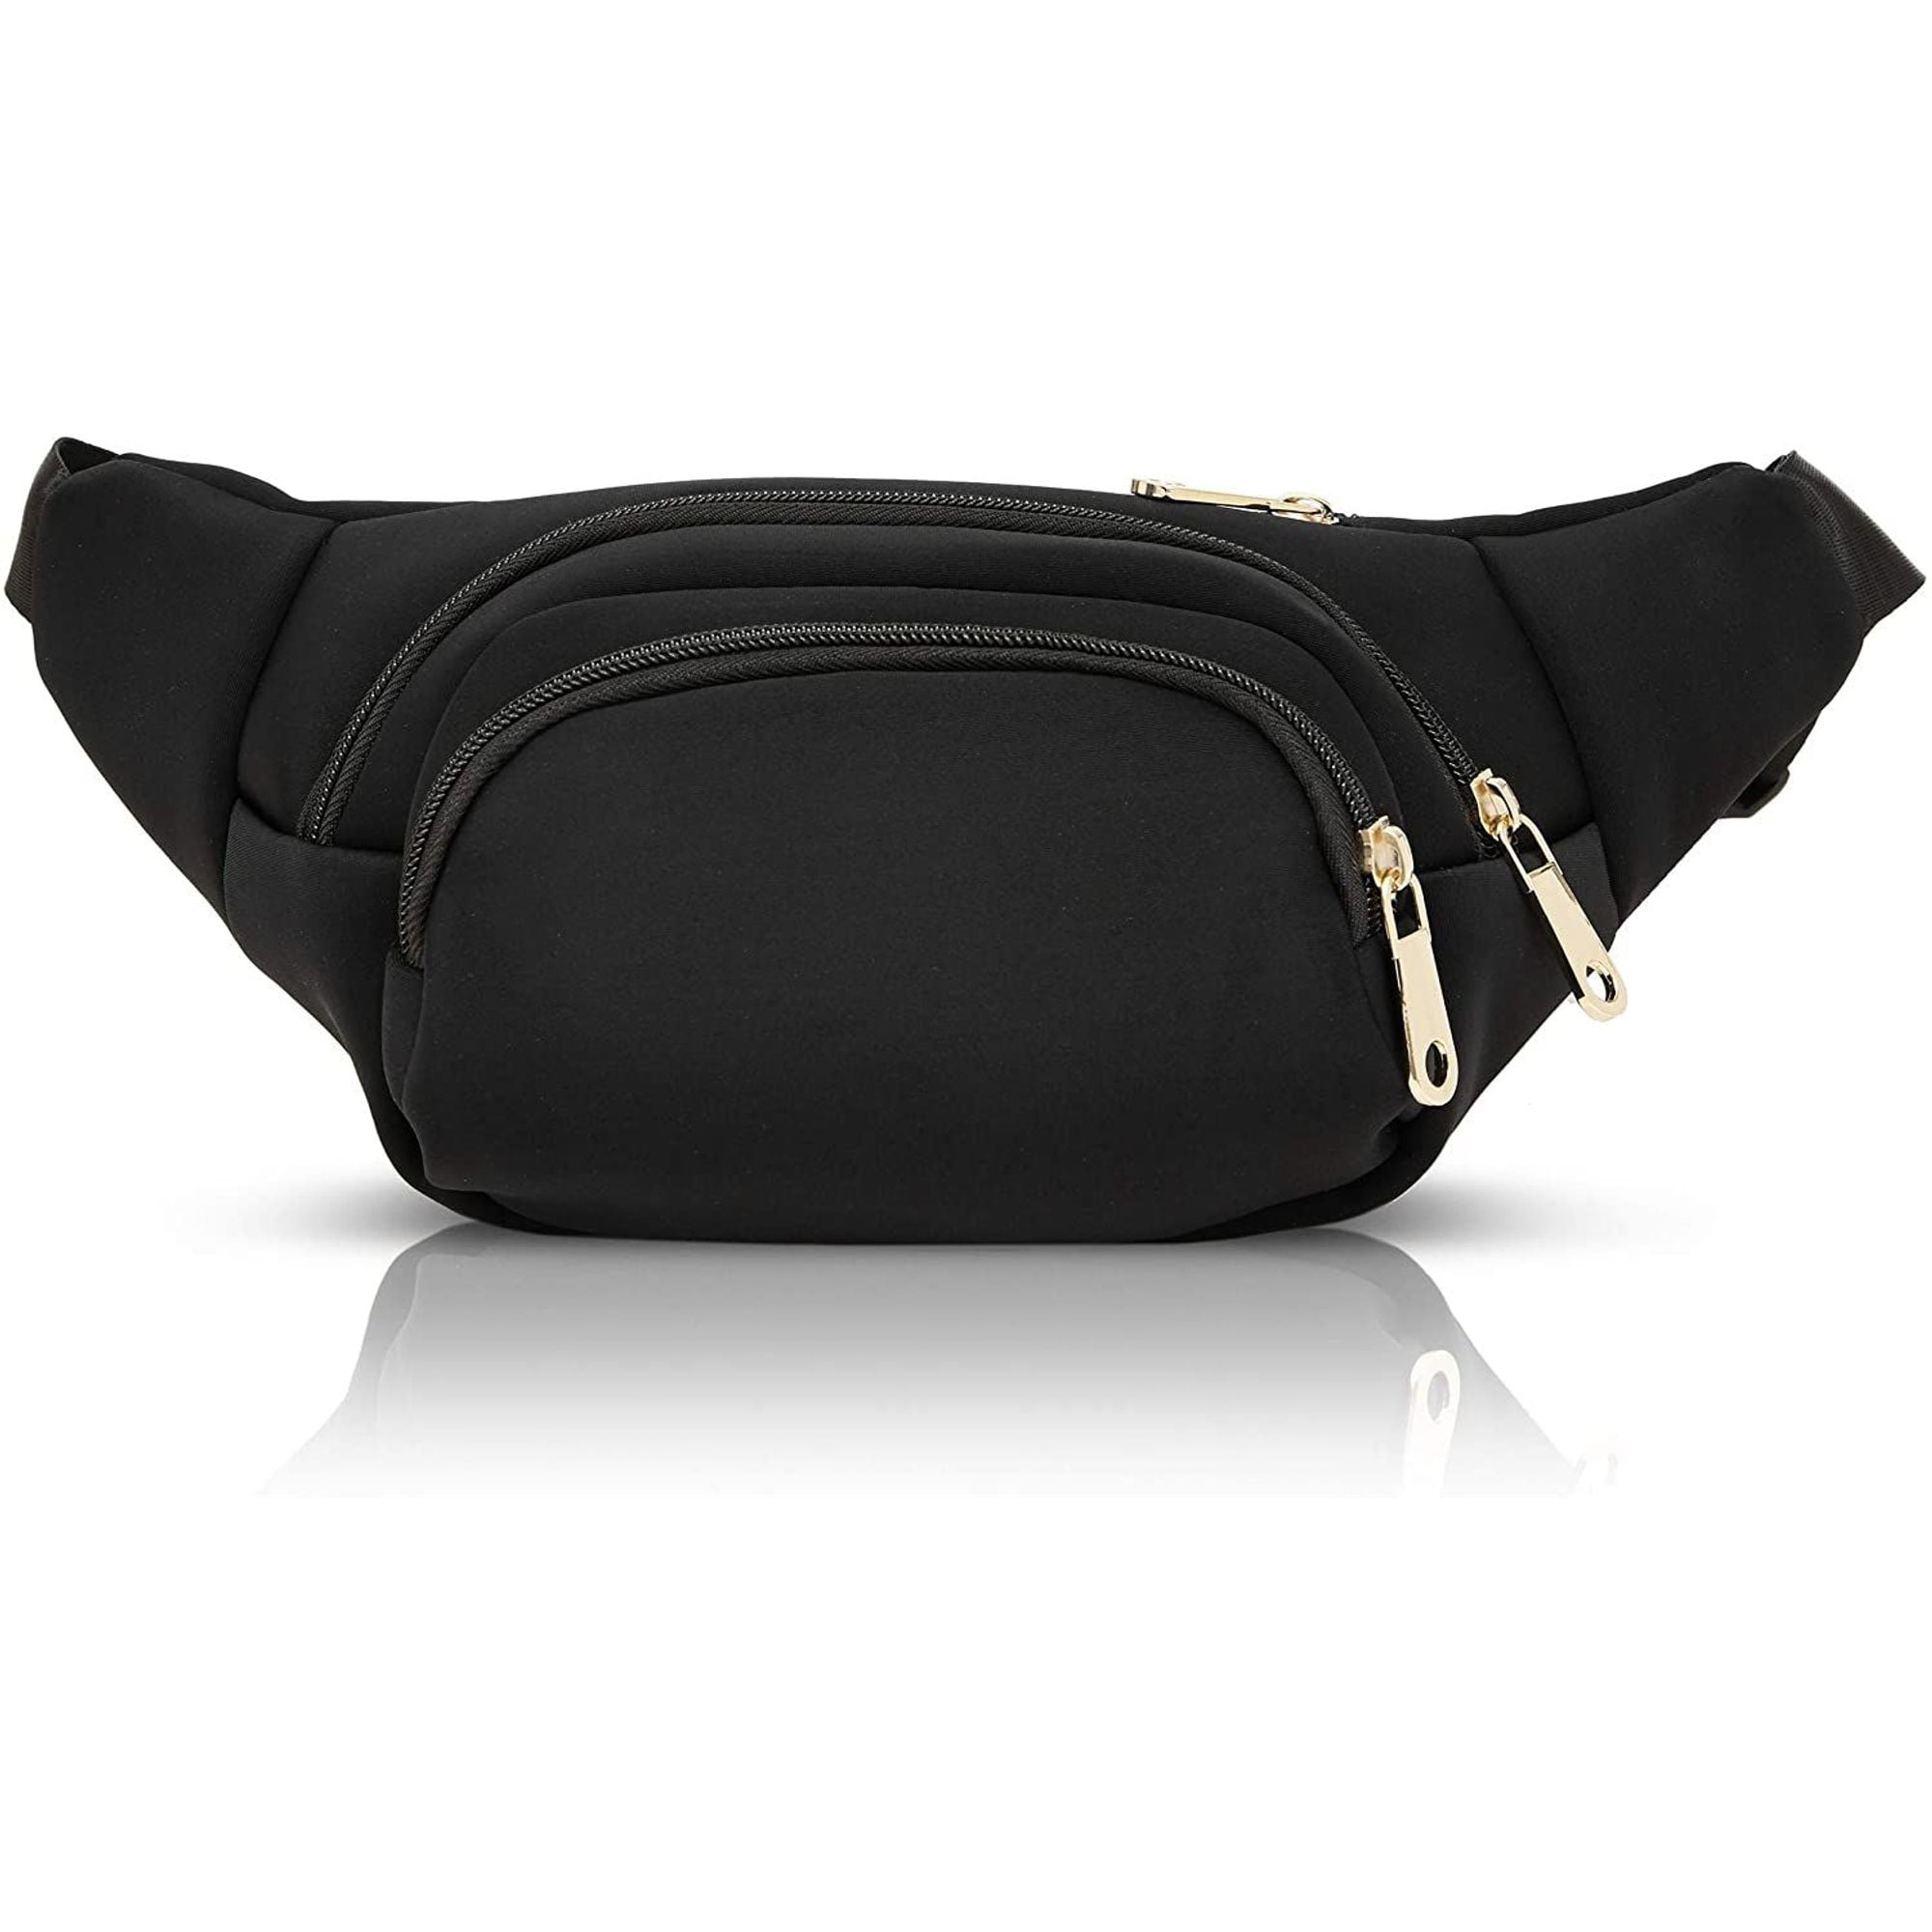 Too Black Fanny Pack Waist Belt Bag Mens Womens Purse Hip Pouch Travel for sale online 